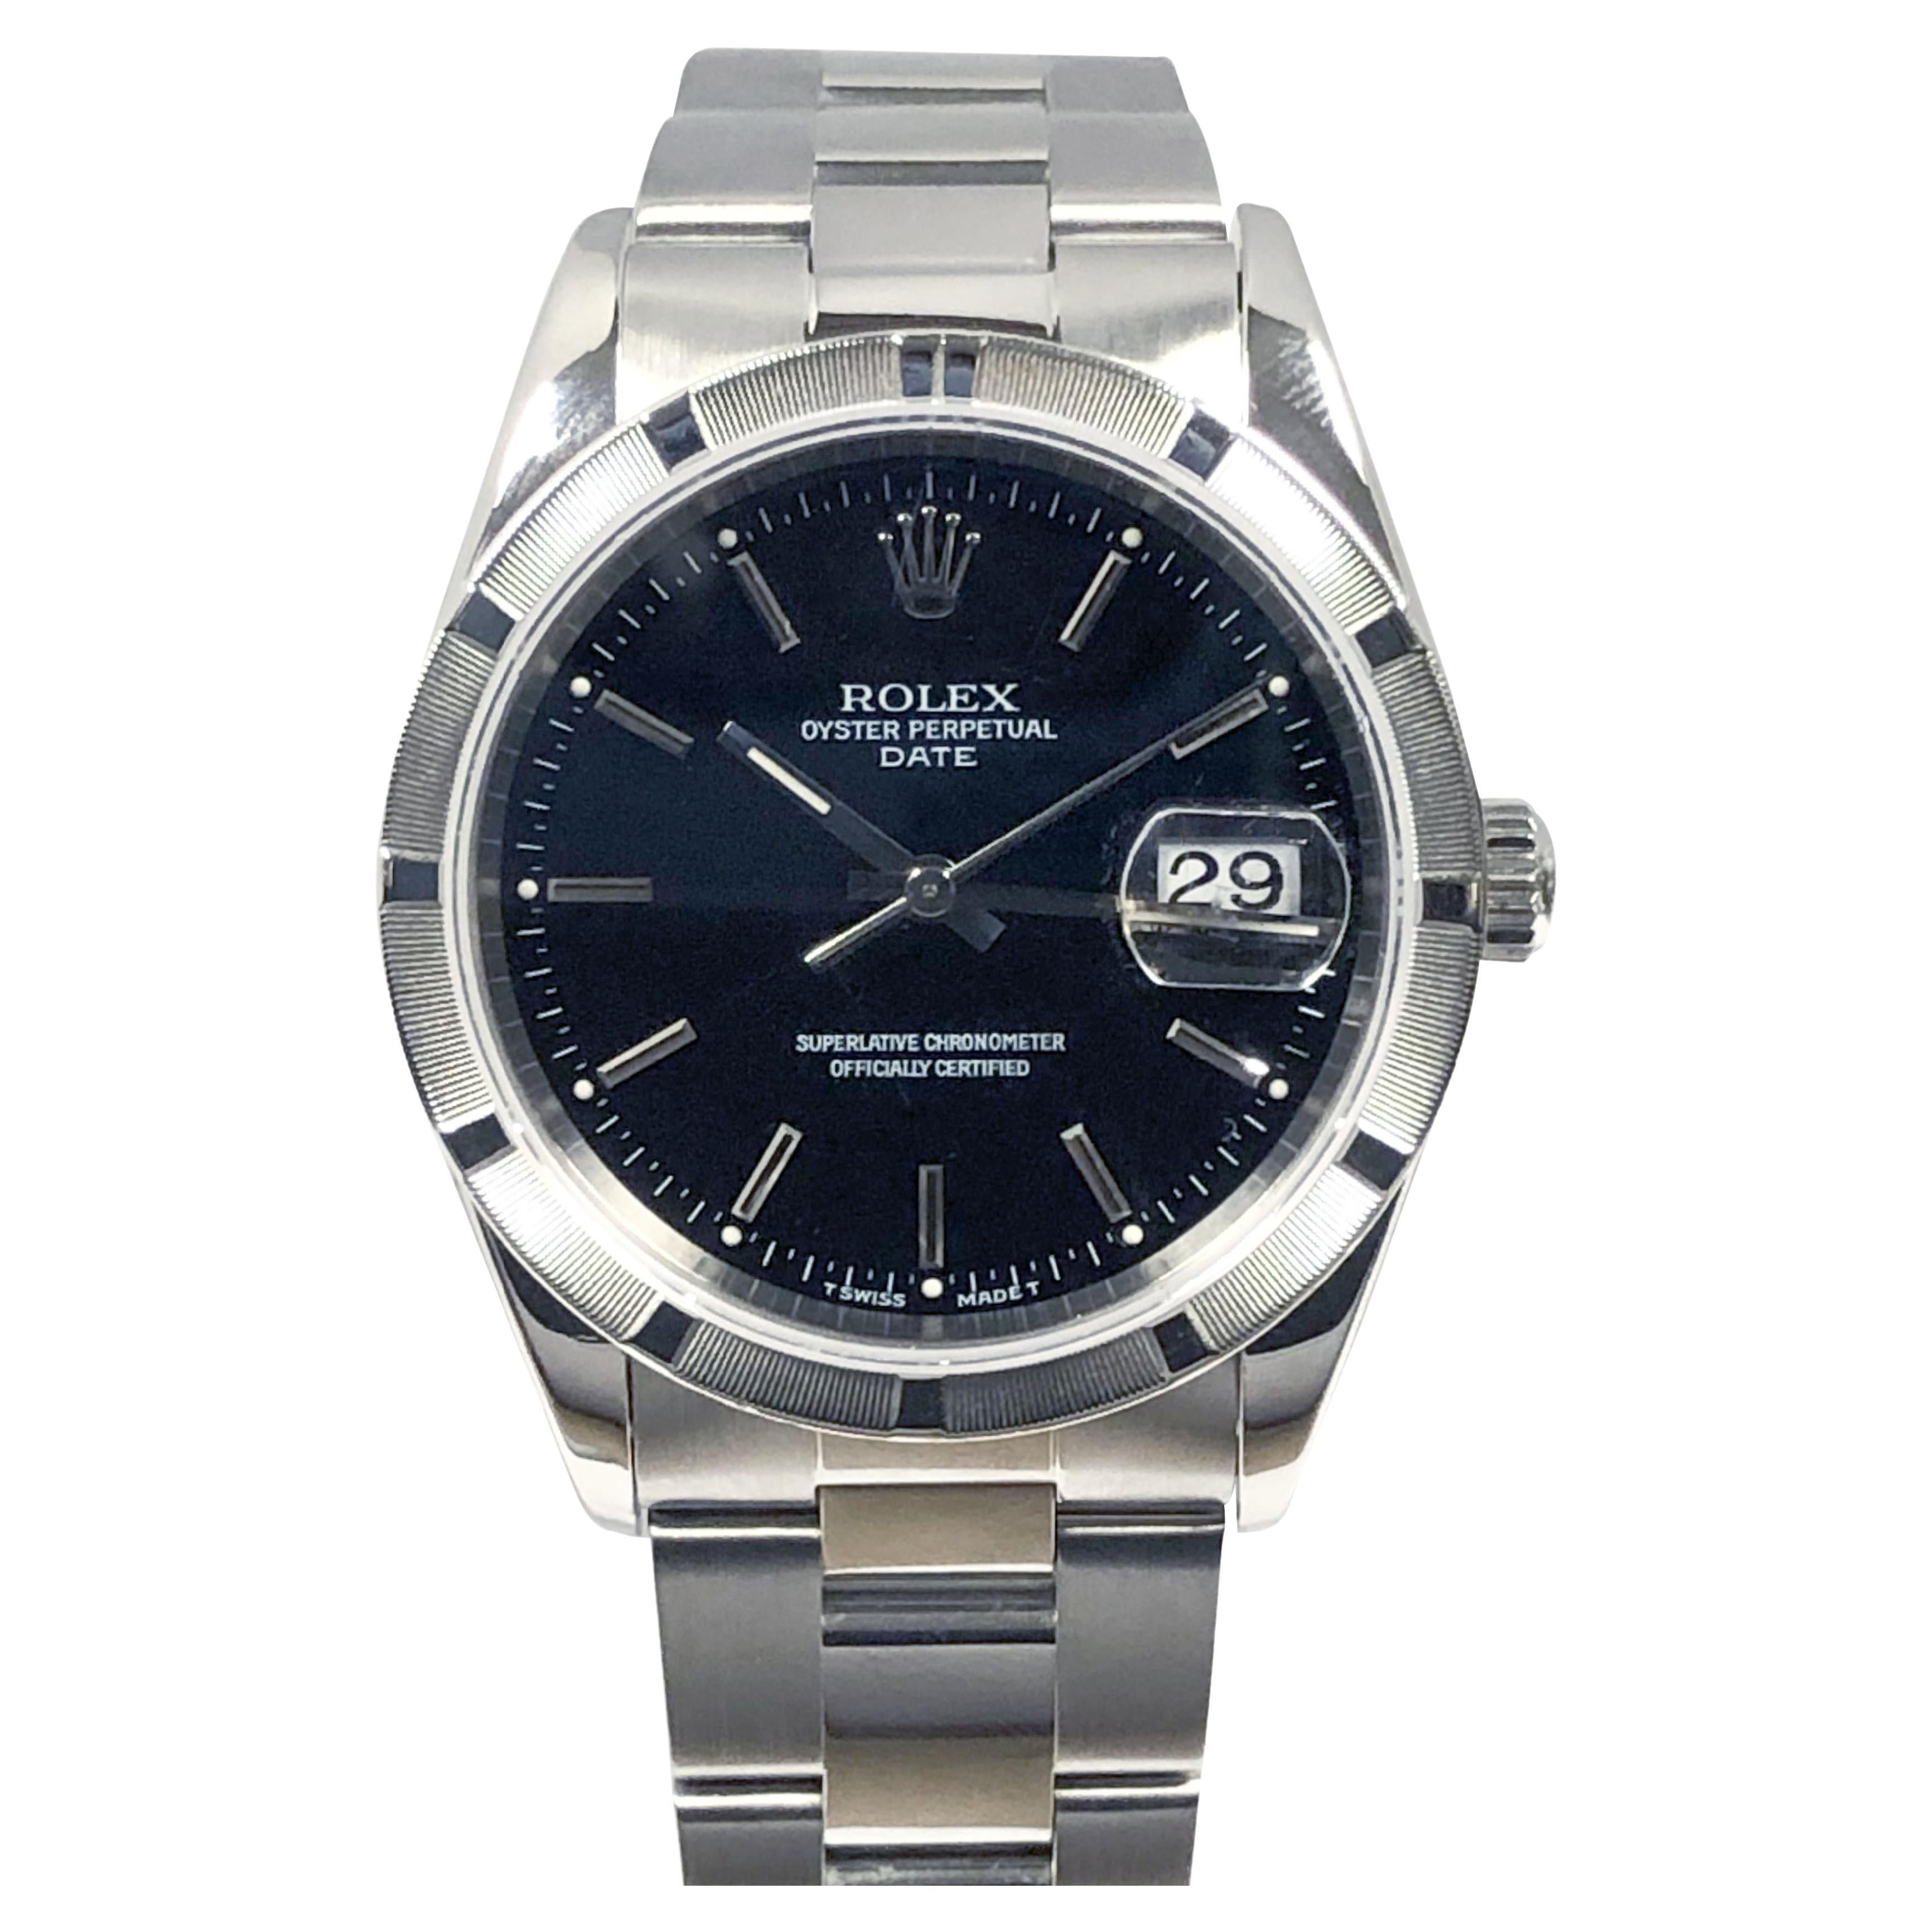 Rolex 2000 Midsize Date Ref 15210 Stainless Steel Wrist Watch